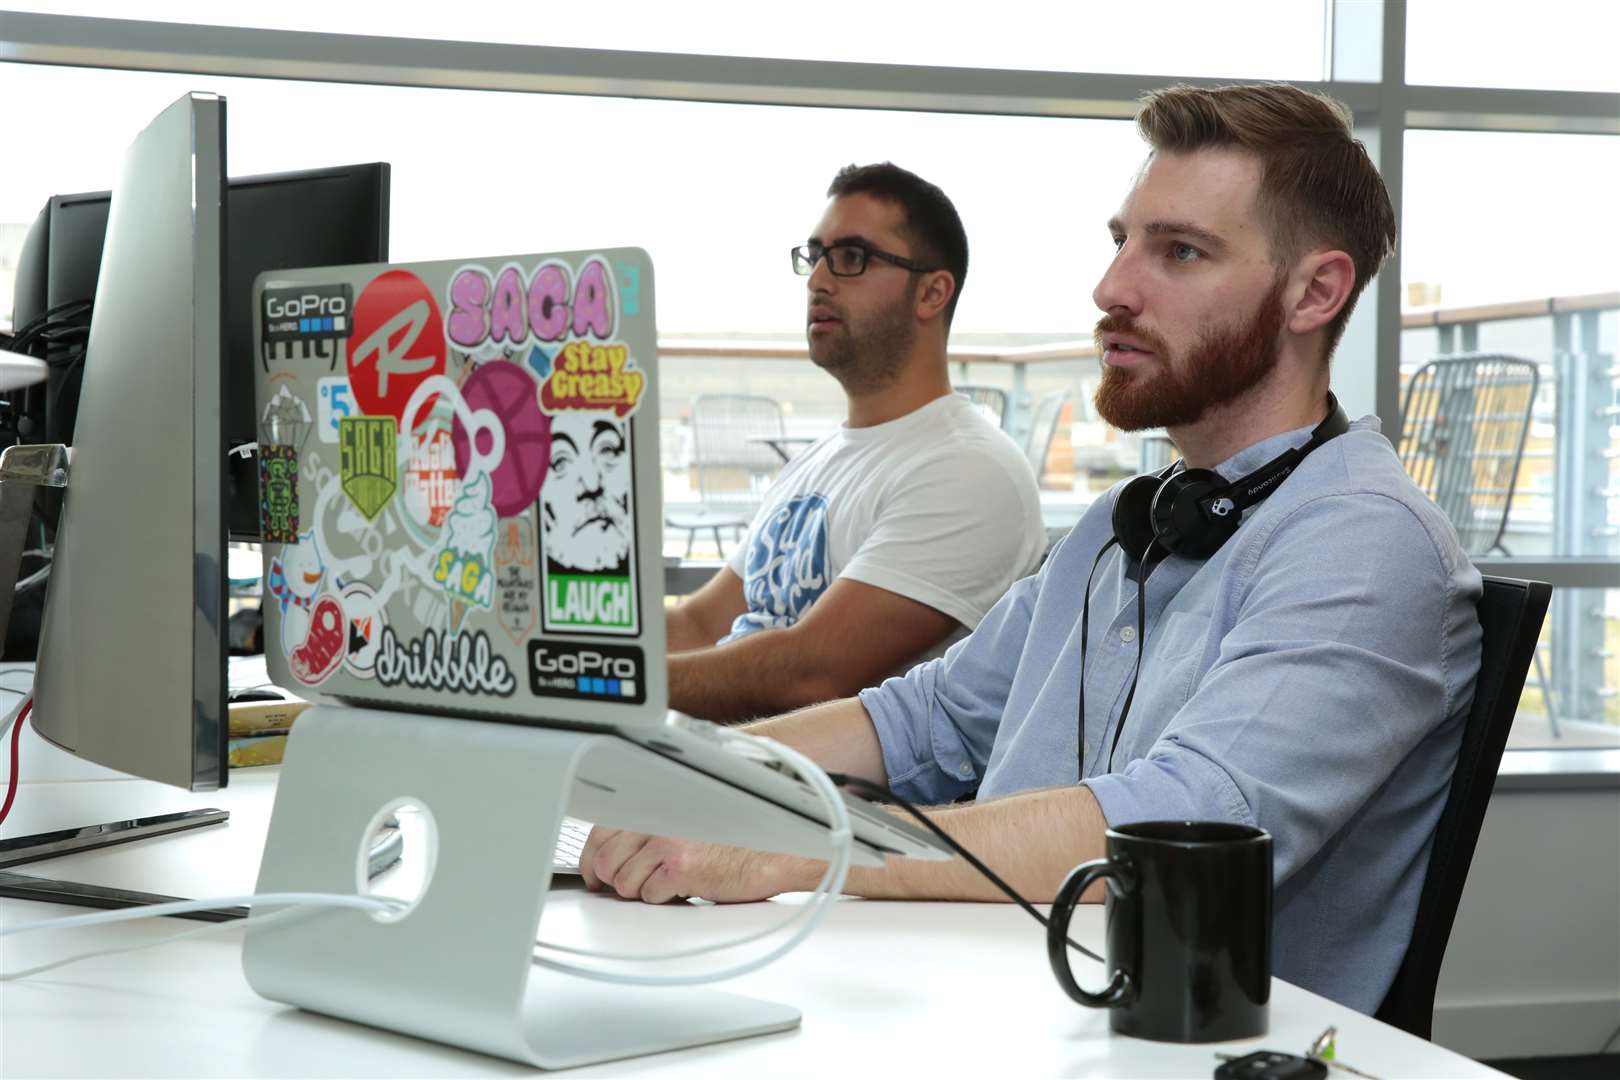 From left, Ahmed Nuaman of Firestarter Media and Craig Dennis of Simple Bit Design